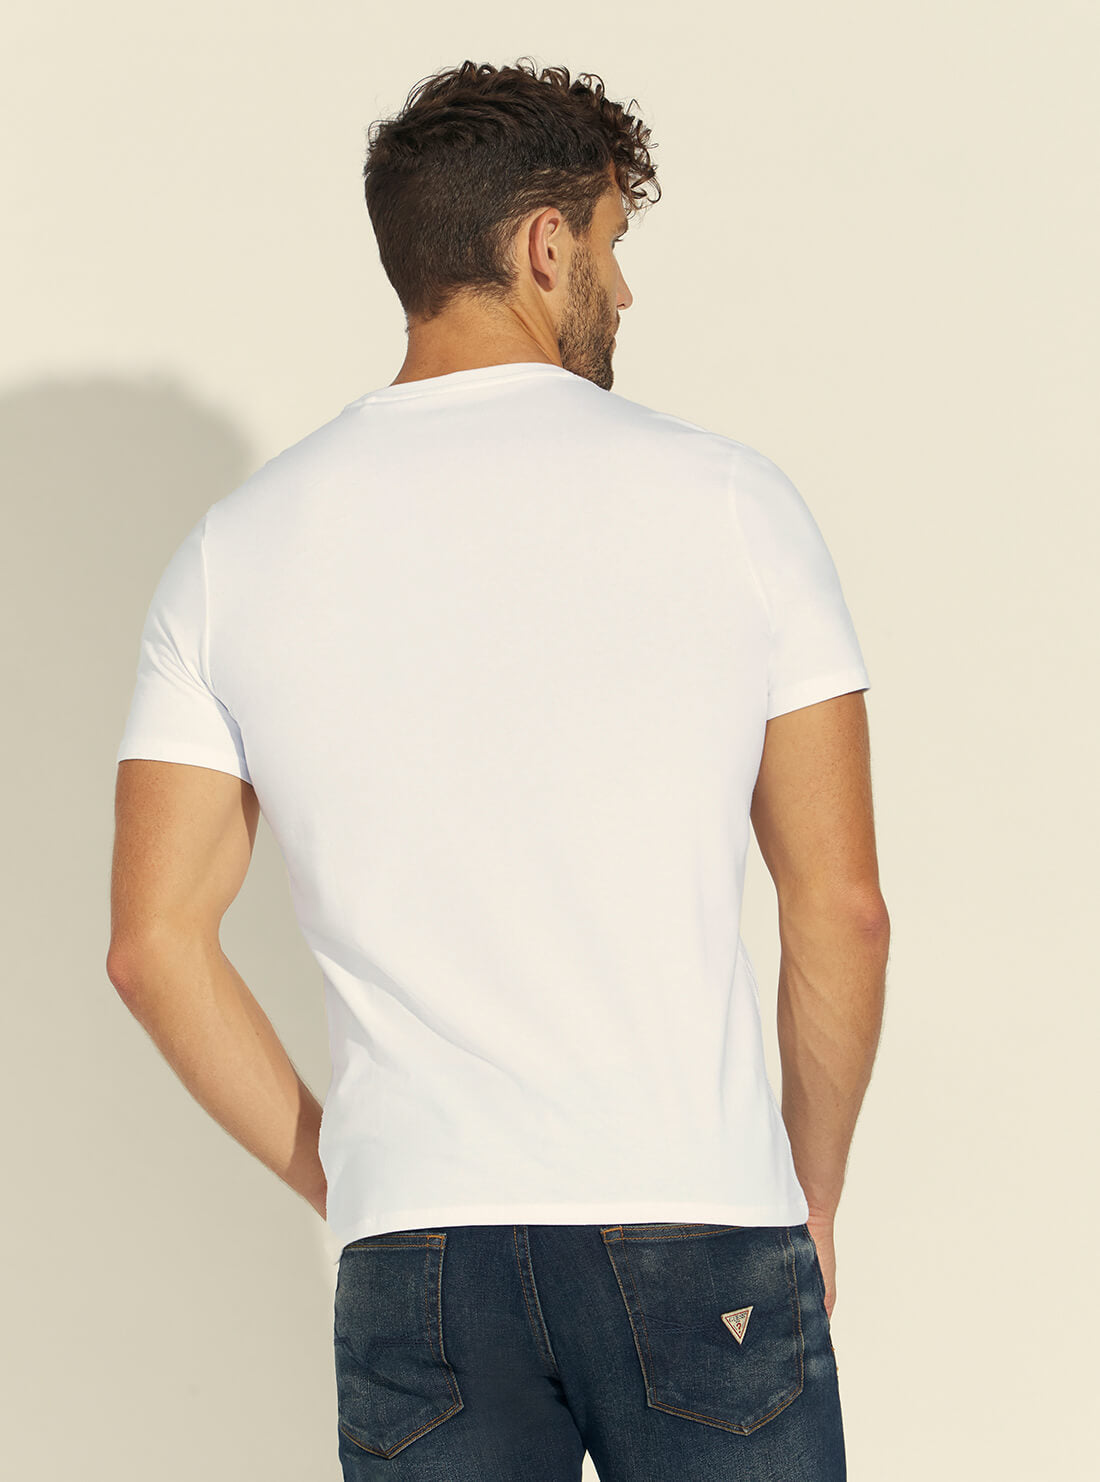 GUESS Mens White Dripping Logo T-Shirt M1BI37J1311 Back View